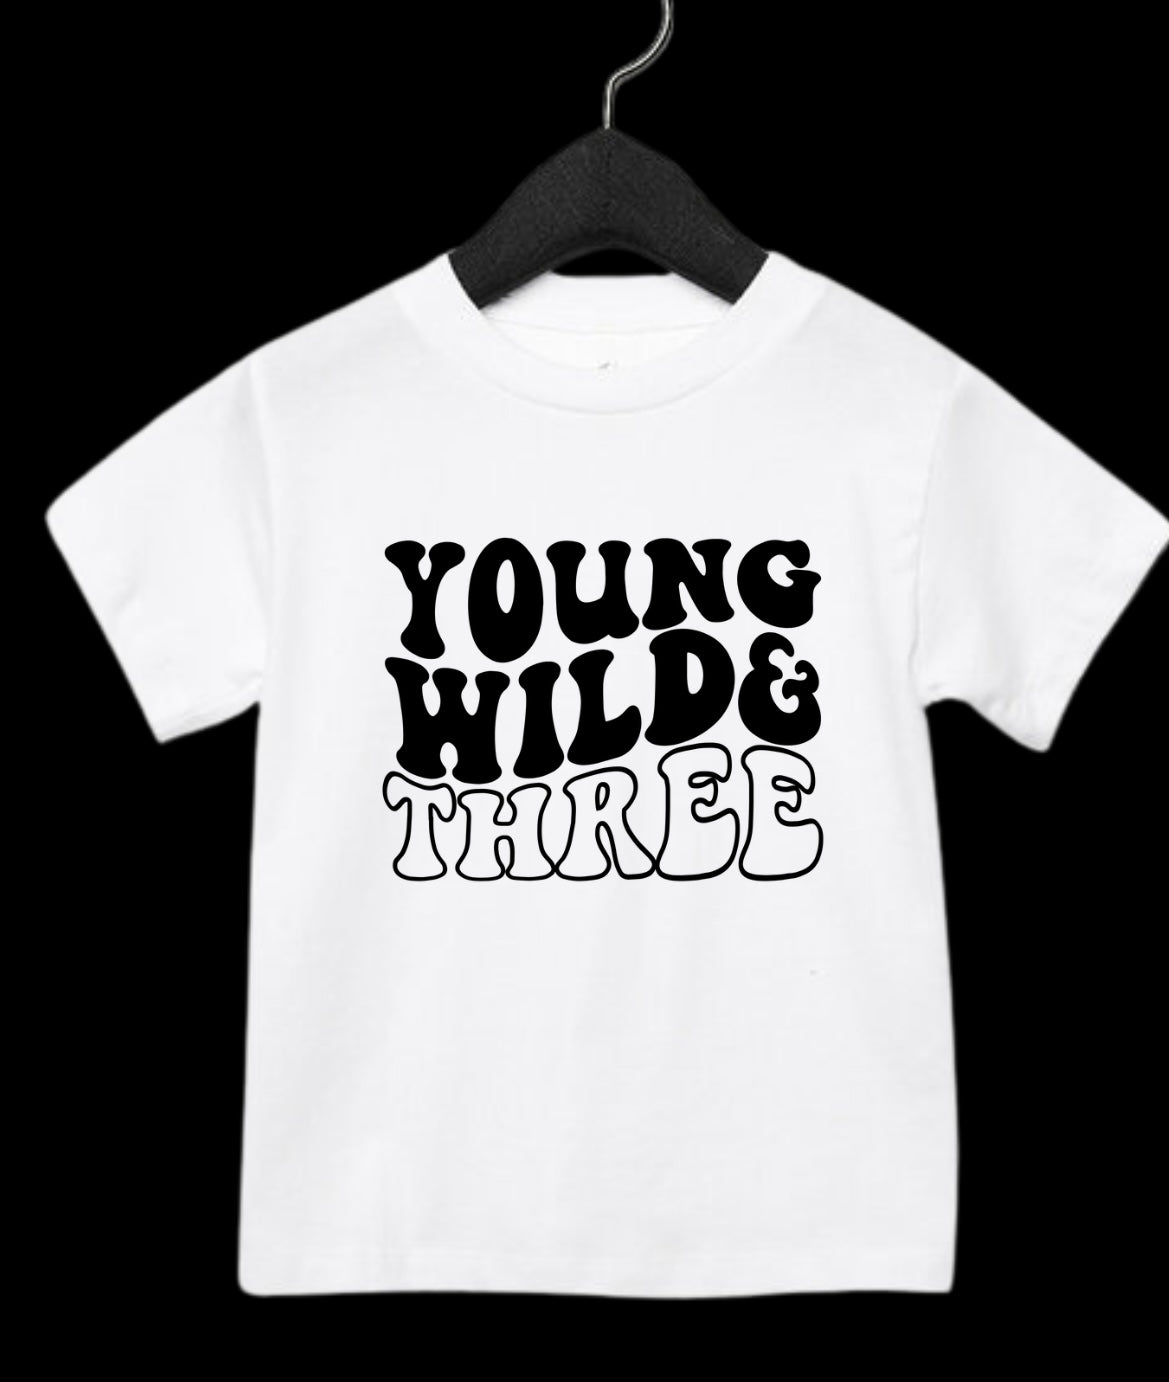 “Young Wild & Three” Birthday Tee (MTO)